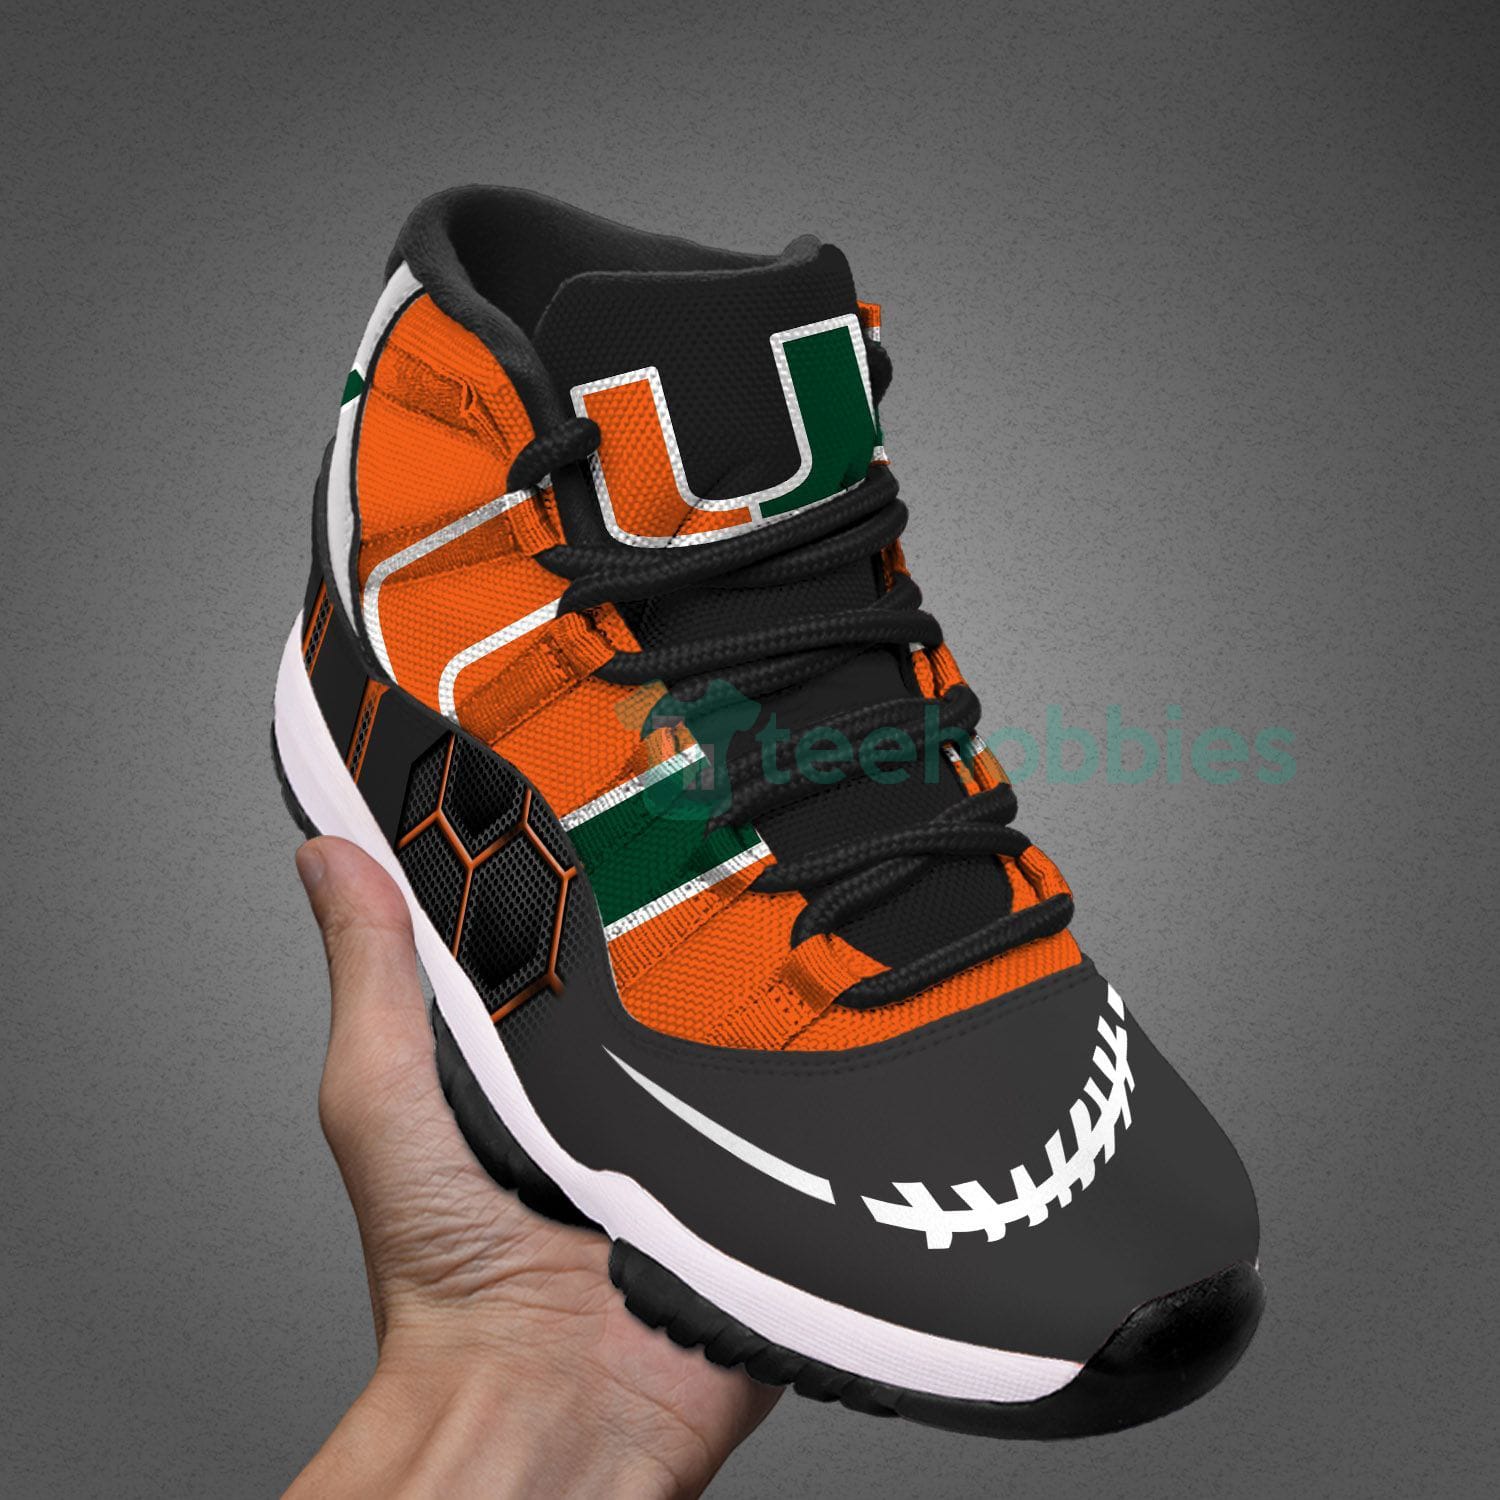 Miami Hurricanes New Air Jordan 11 Shoes Trending Product photo 2